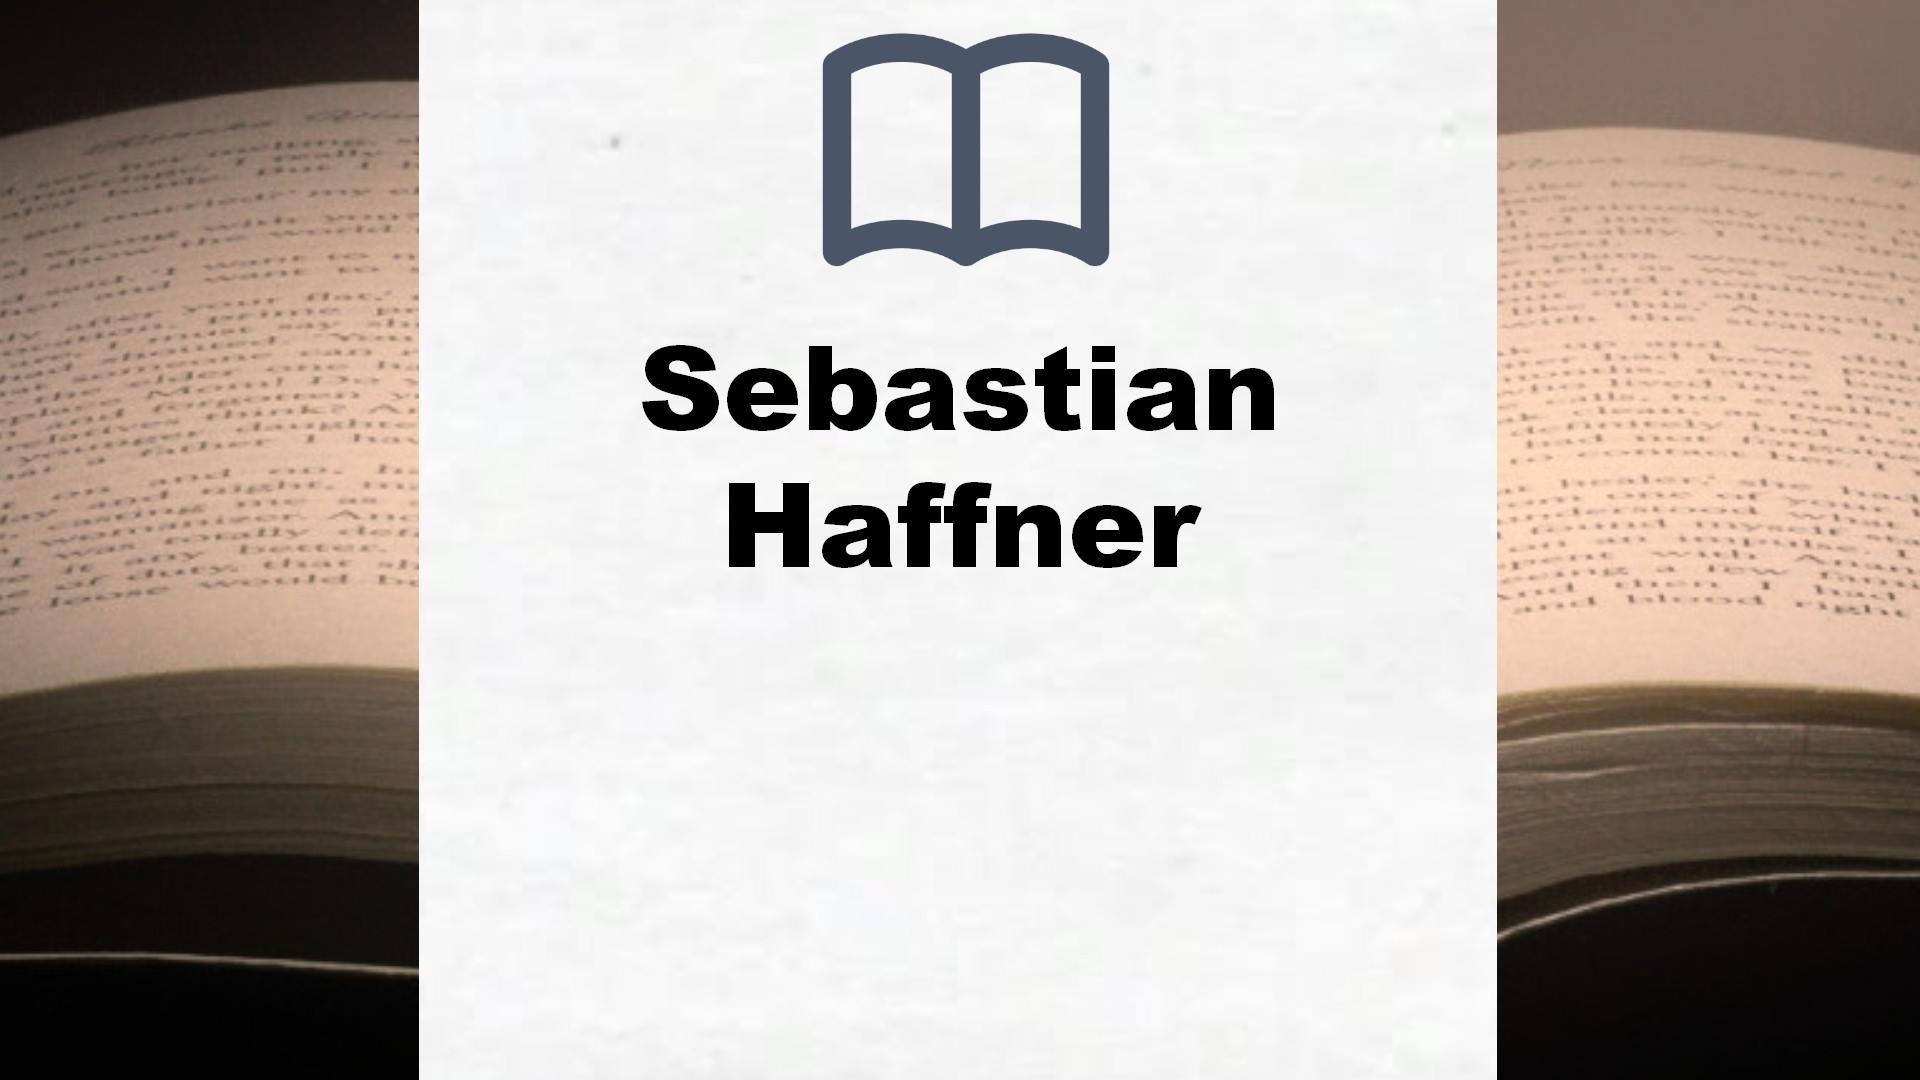 Libros Sebastian Haffner